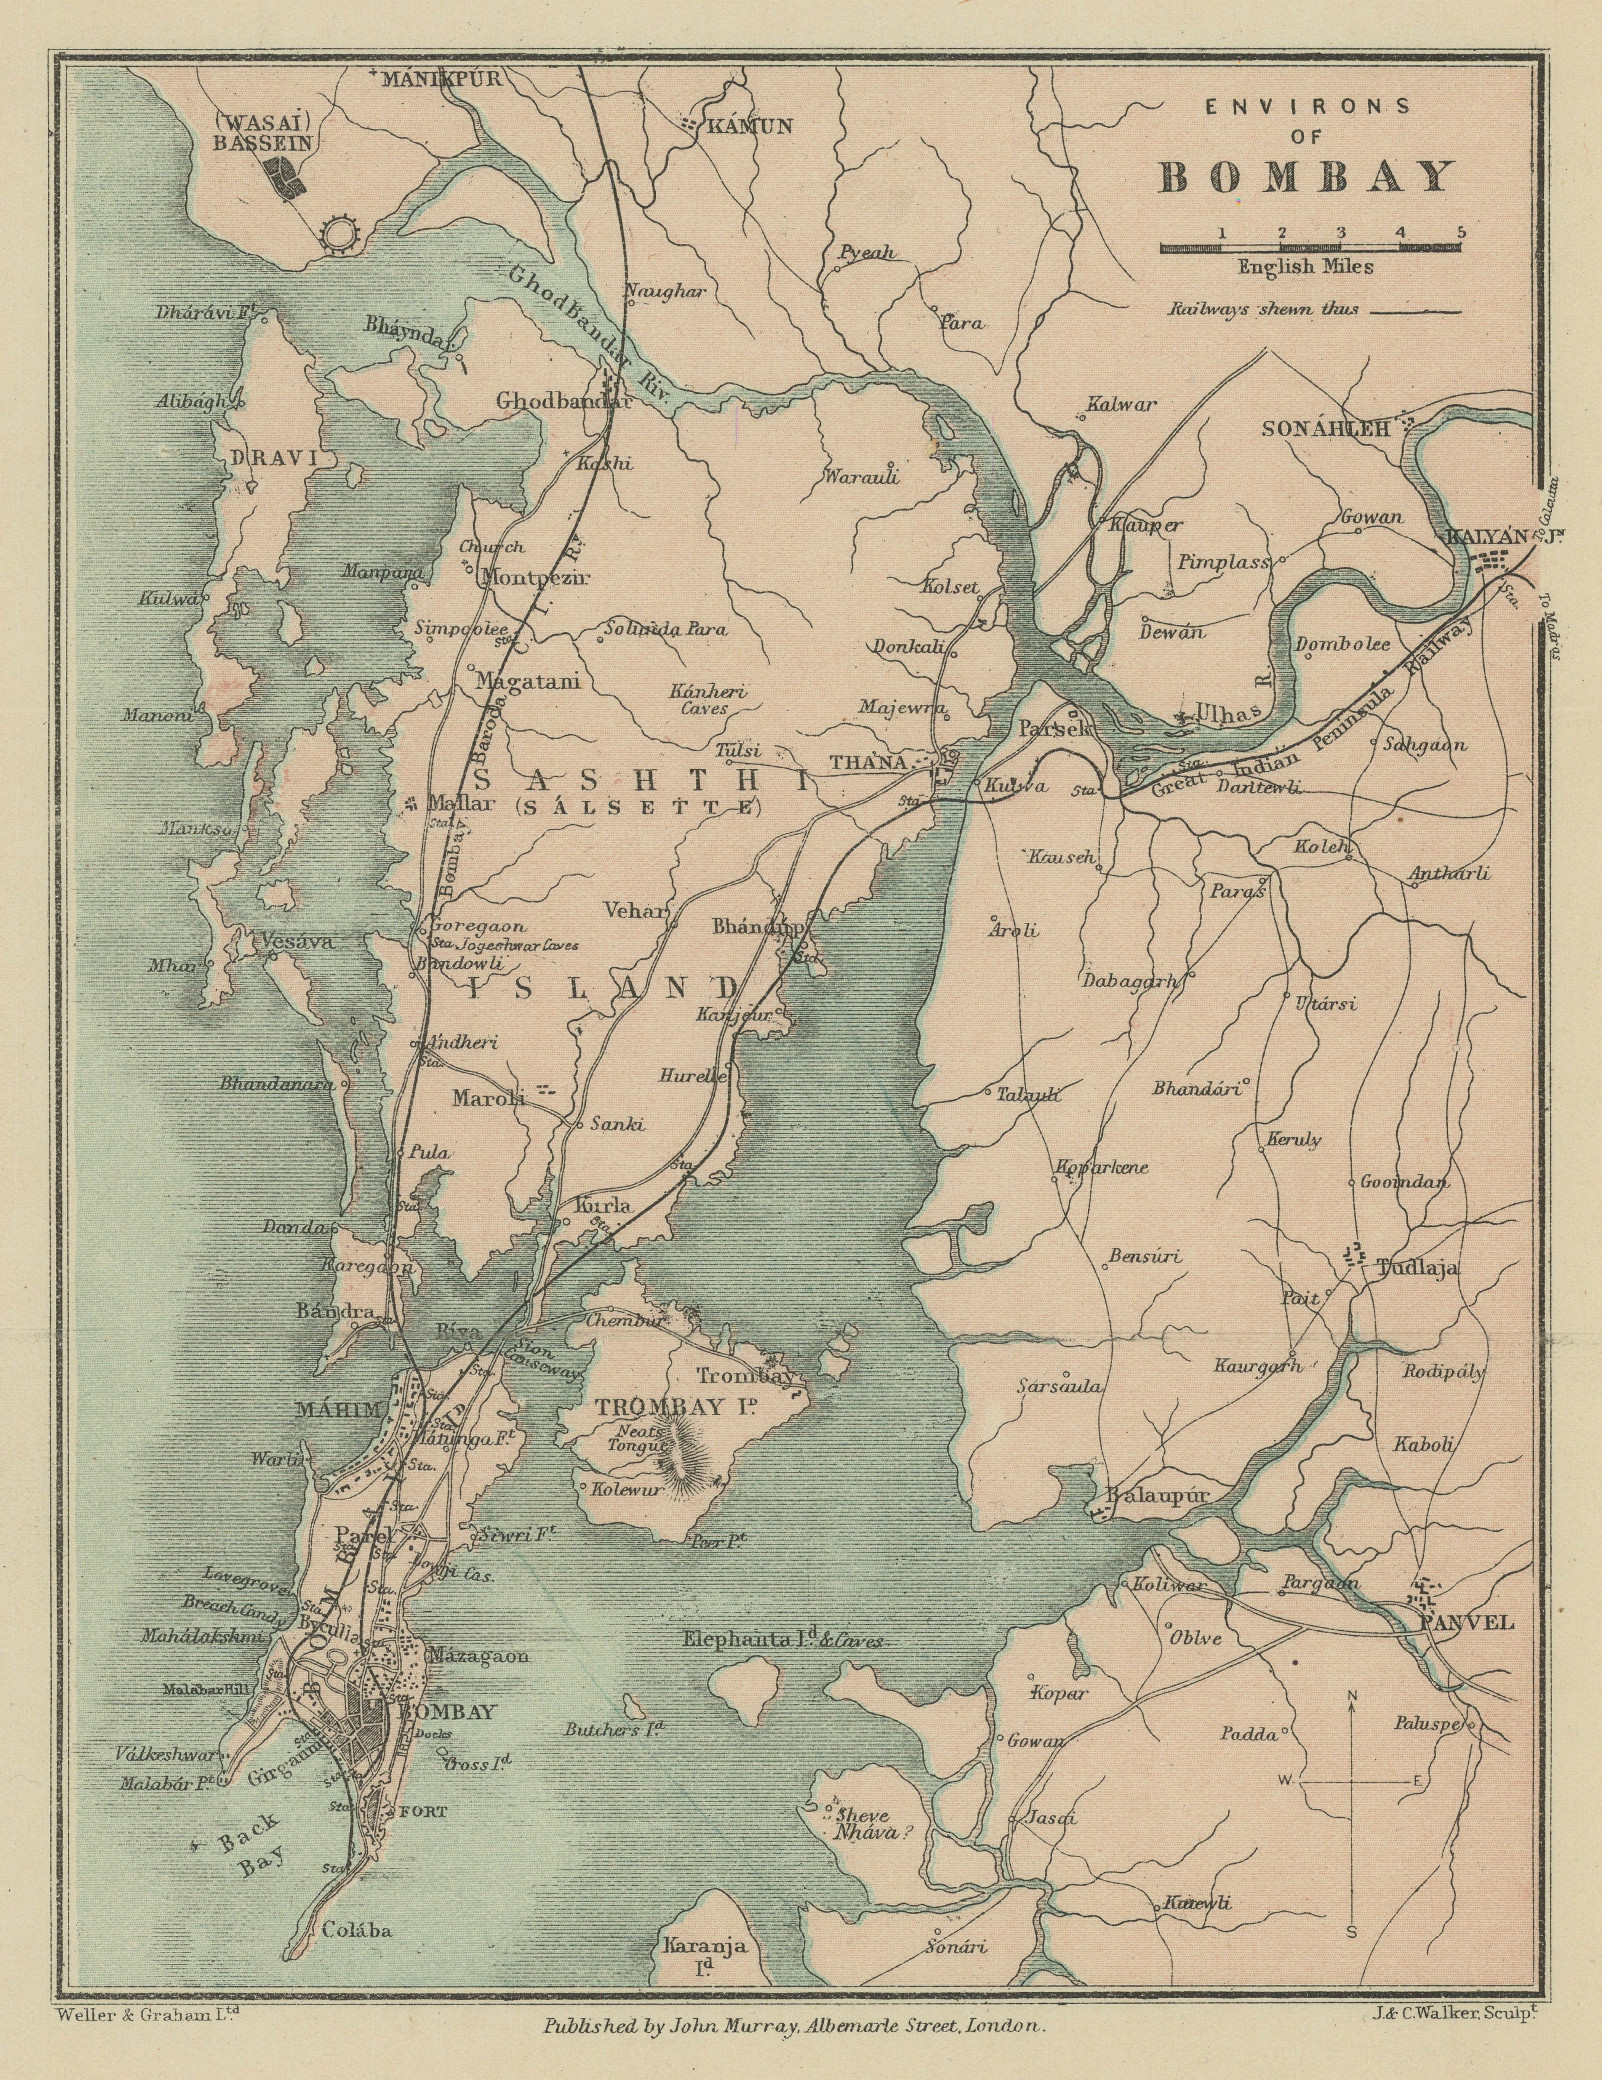 INDIA. Bombay (Mumbai) environs. Maharashtra. Salsette Matheran Kalyan 1905 map